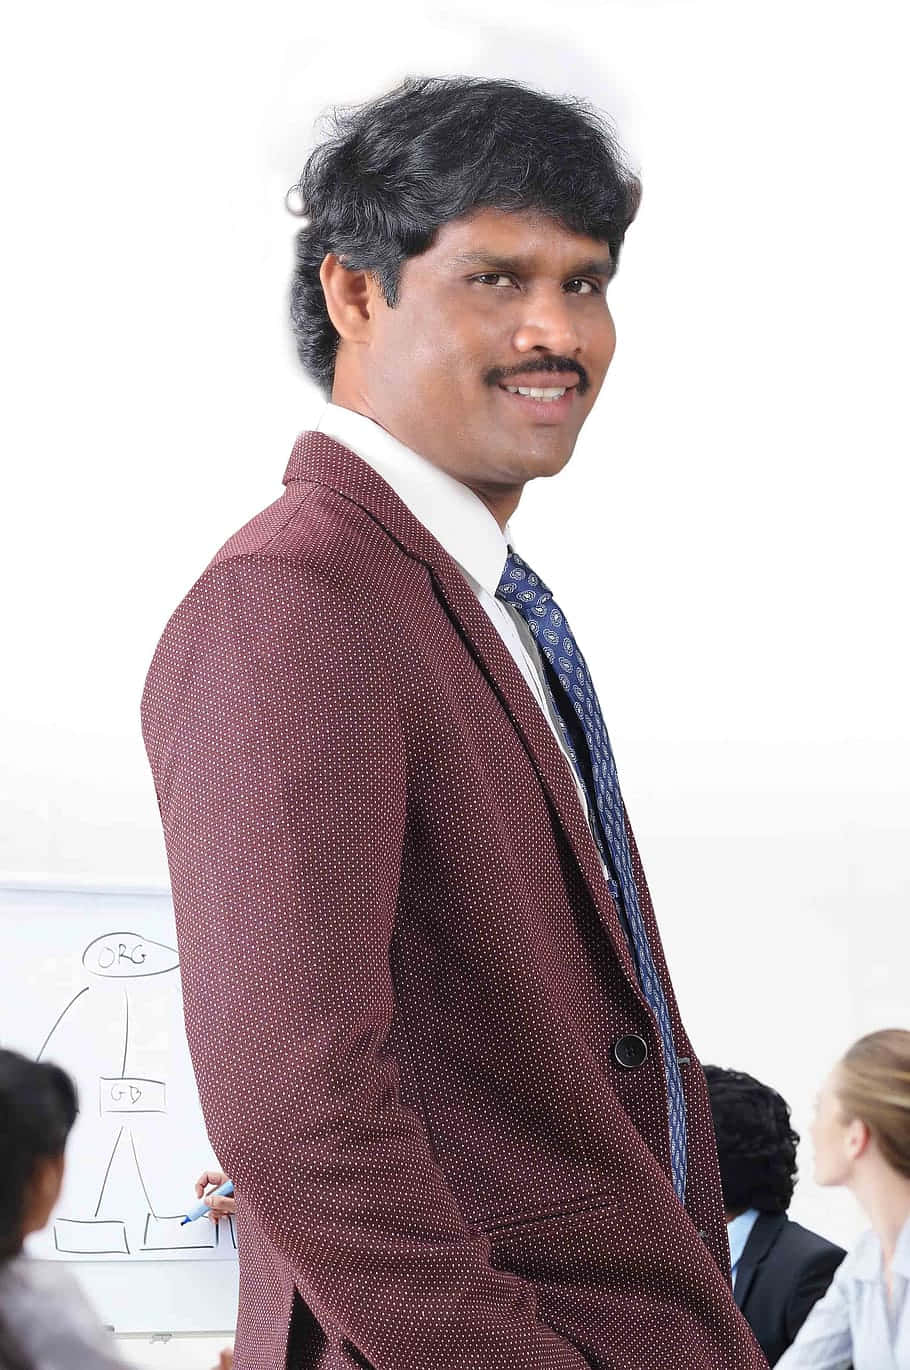 Indian Guy In Formal Suit Medium Angle Shot Wallpaper